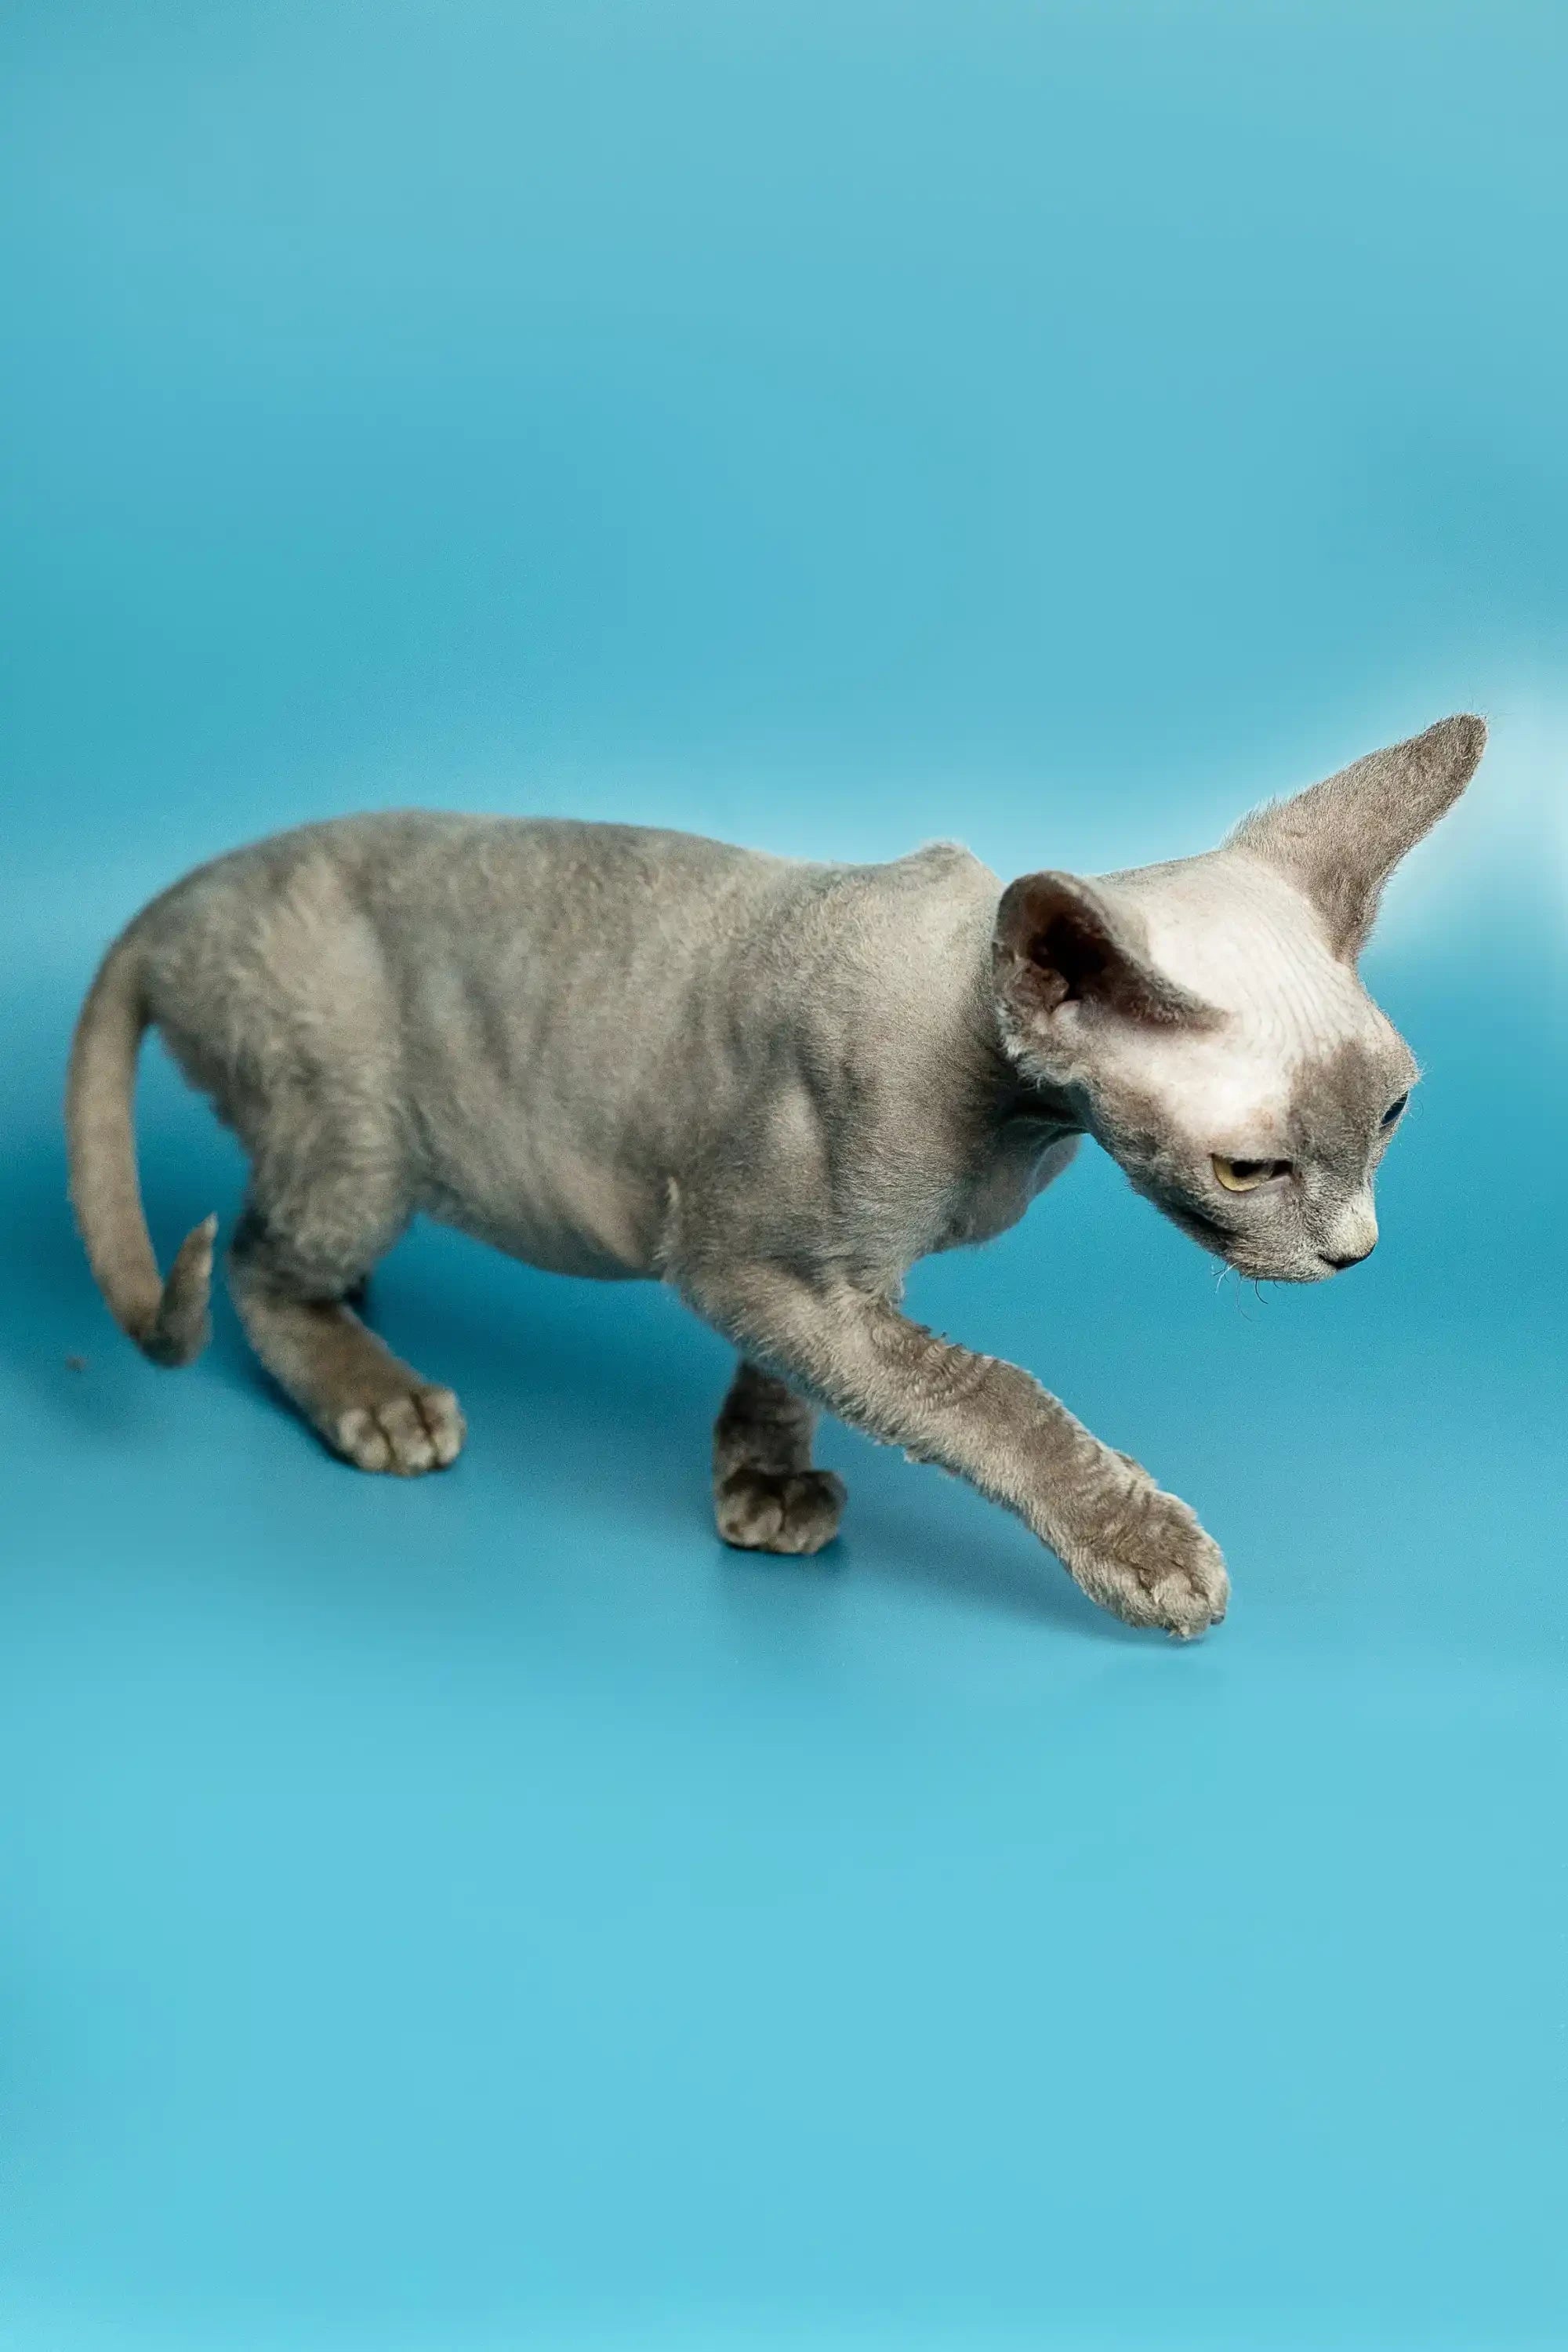 Devon Rex Kittens For Sale Richard | Kitten